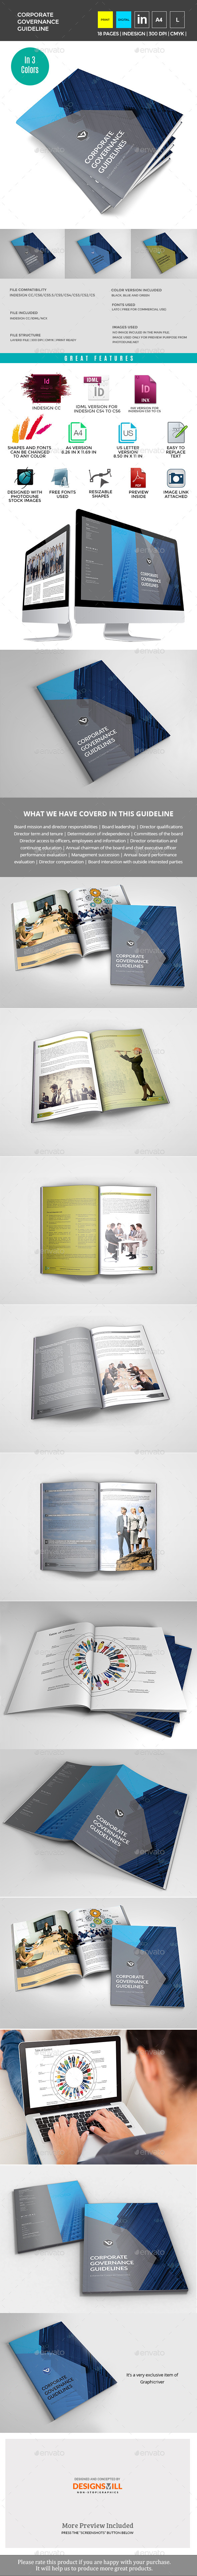 GraphicRiver Corporate Governance Guideline Handbook Brochure 11646826